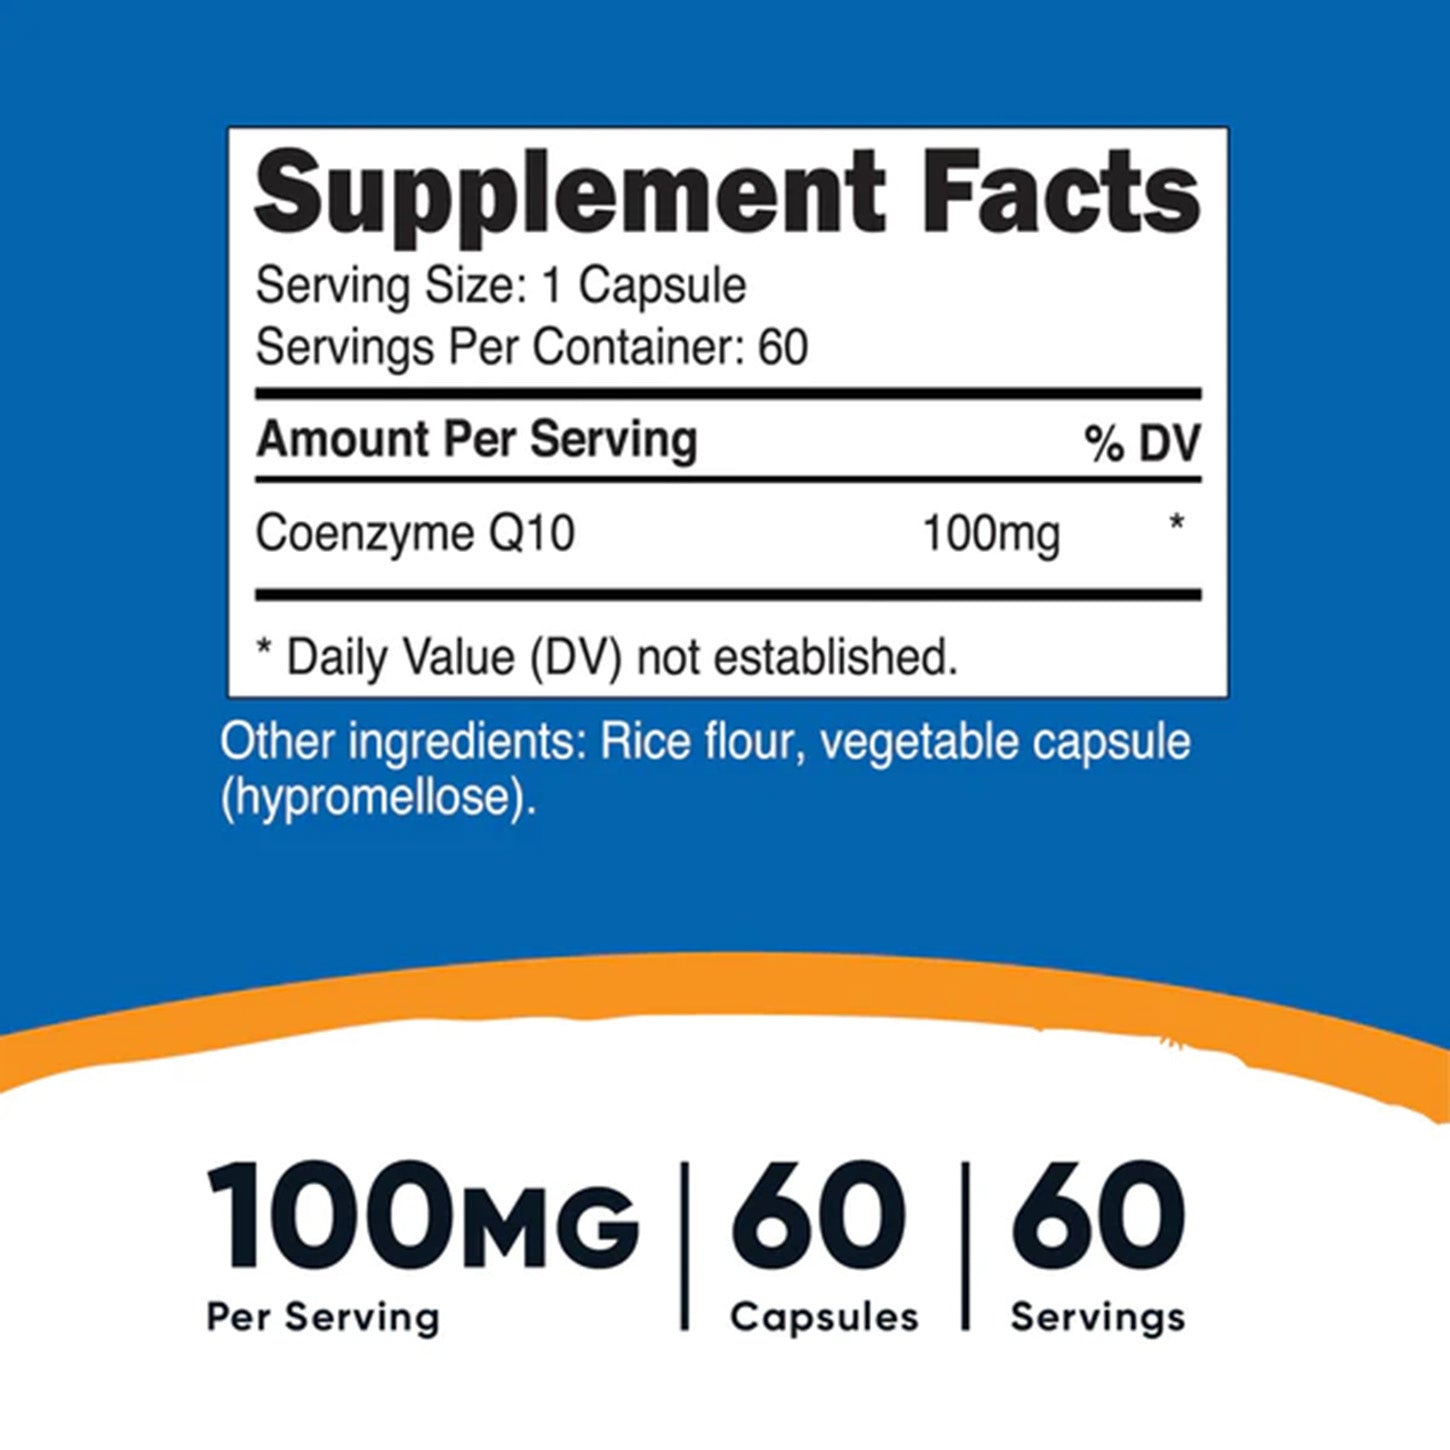 Optimiza tu Salud Cardiovascular con Nutricost CoQ10 Capsules | ProHealth Shop [Panamá]